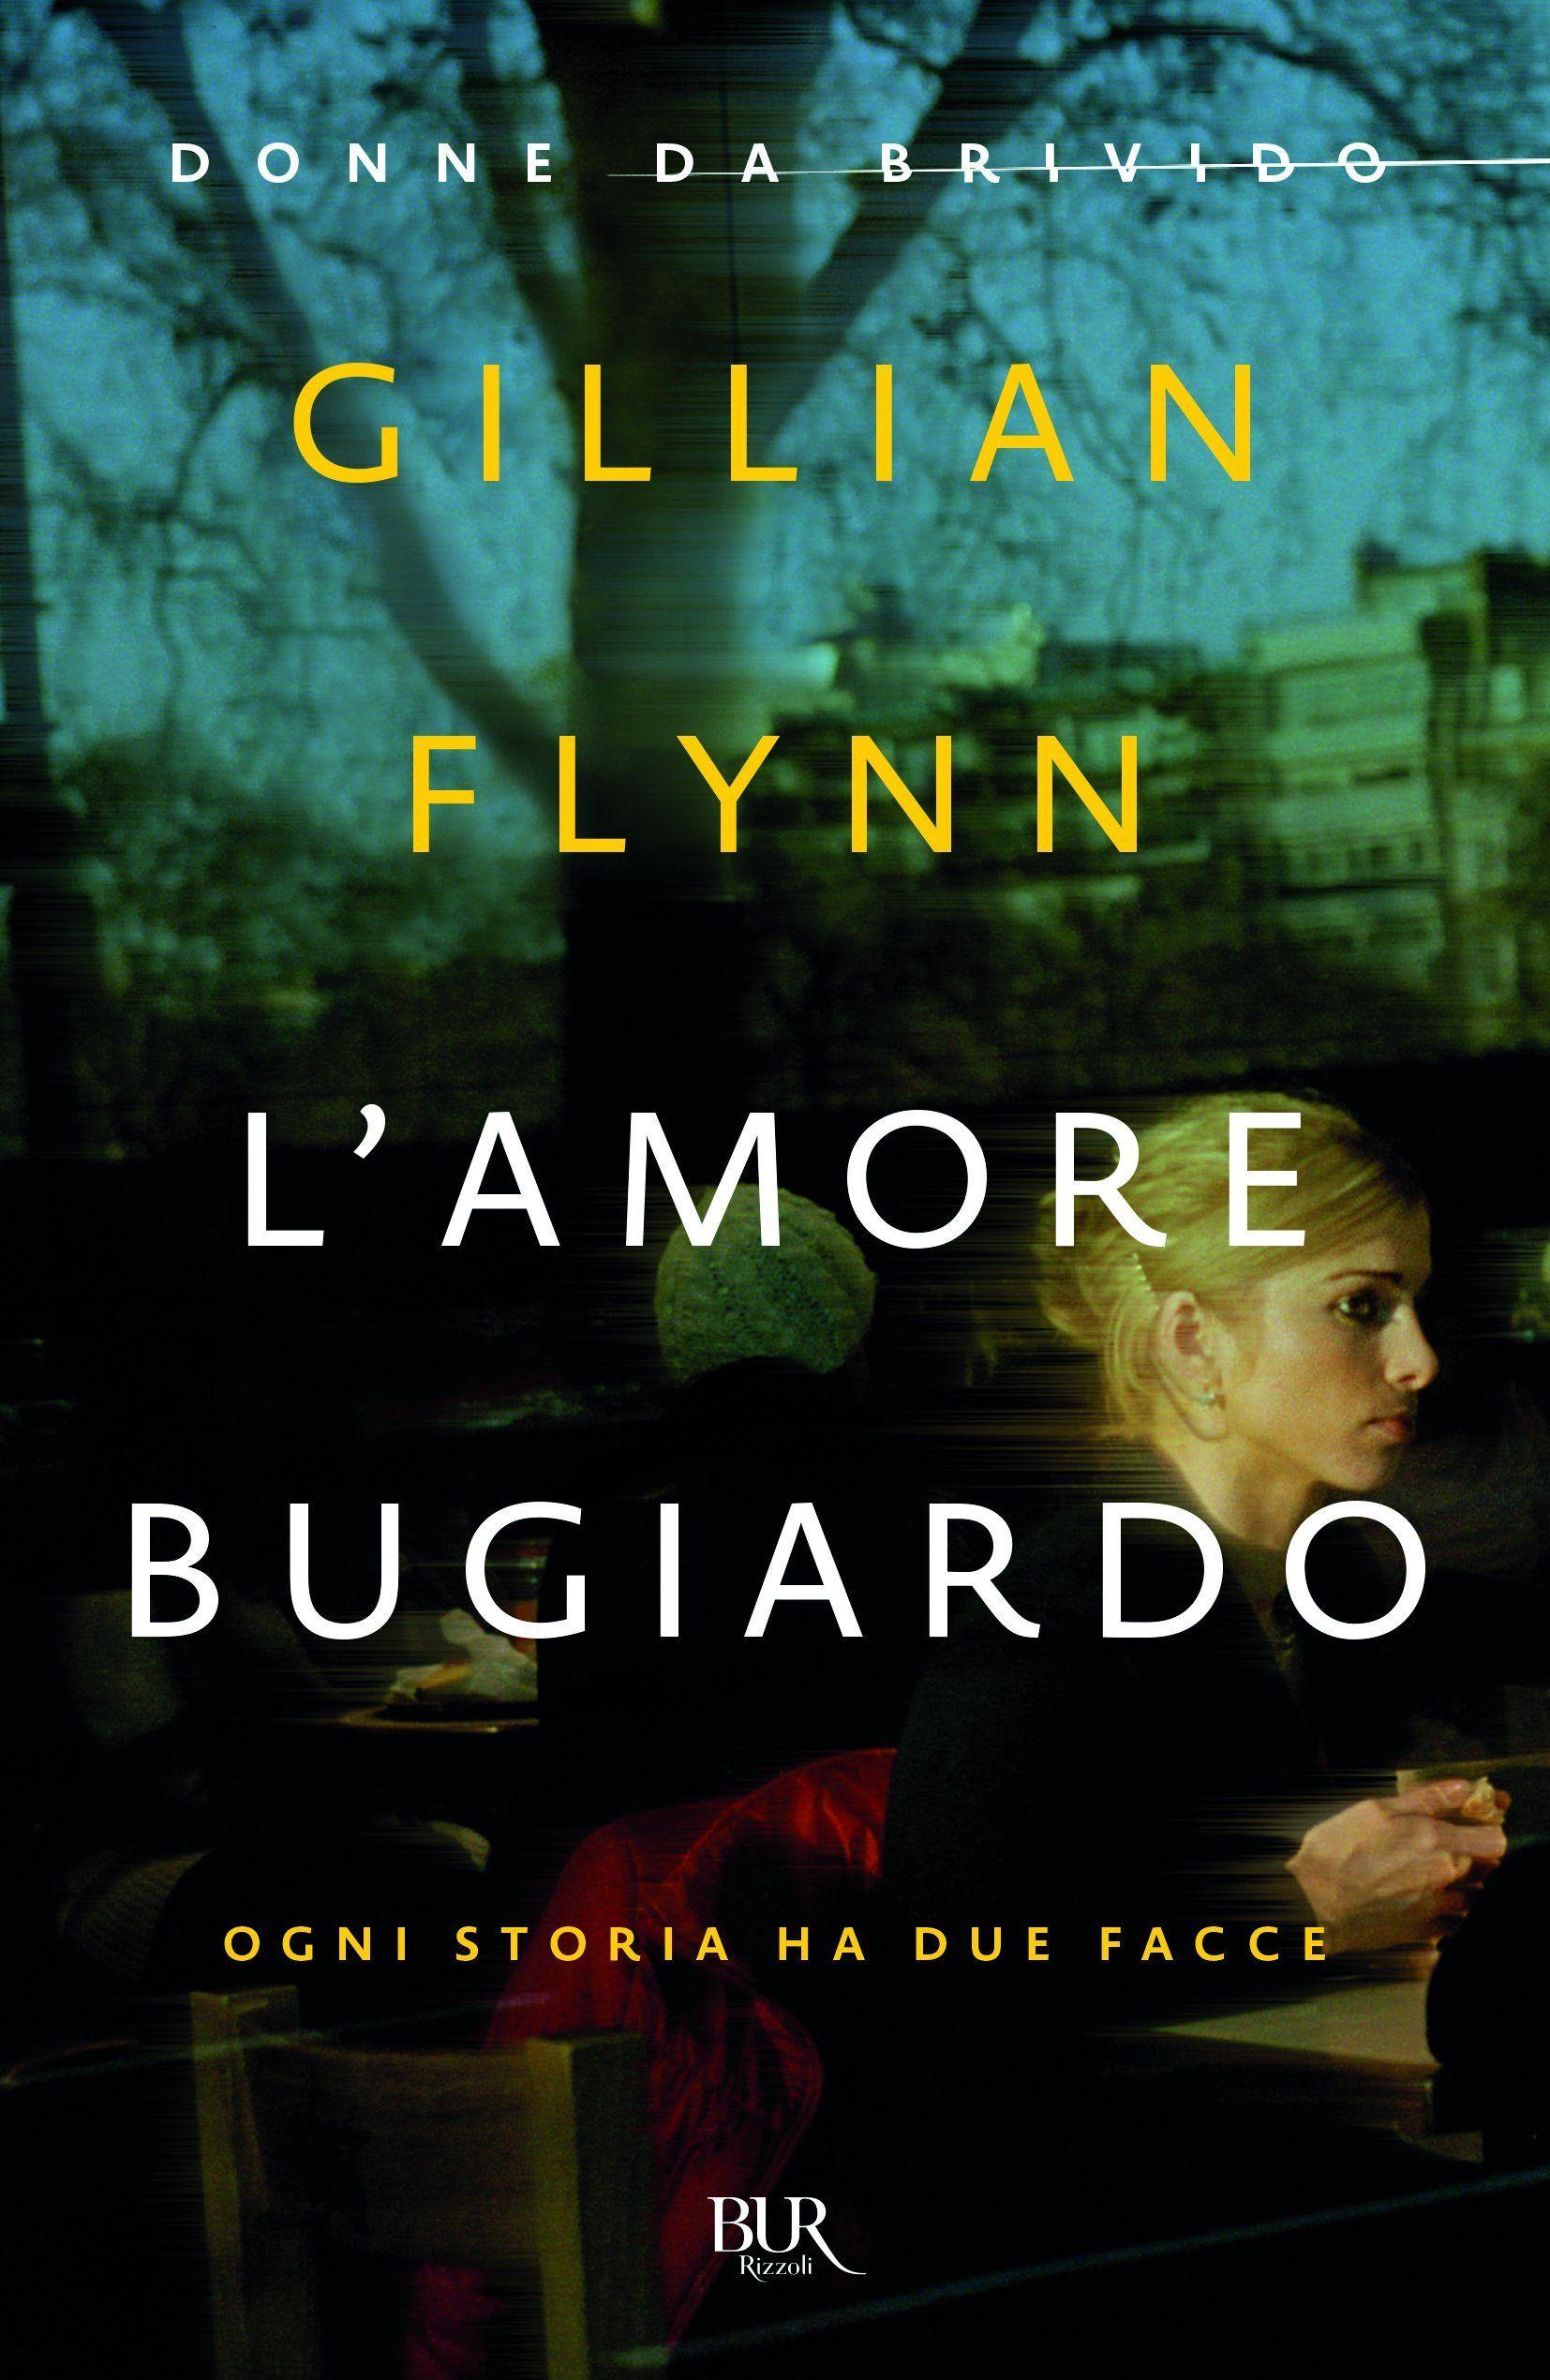 Libro "L'amore bugiardo" di Gillian Flynn